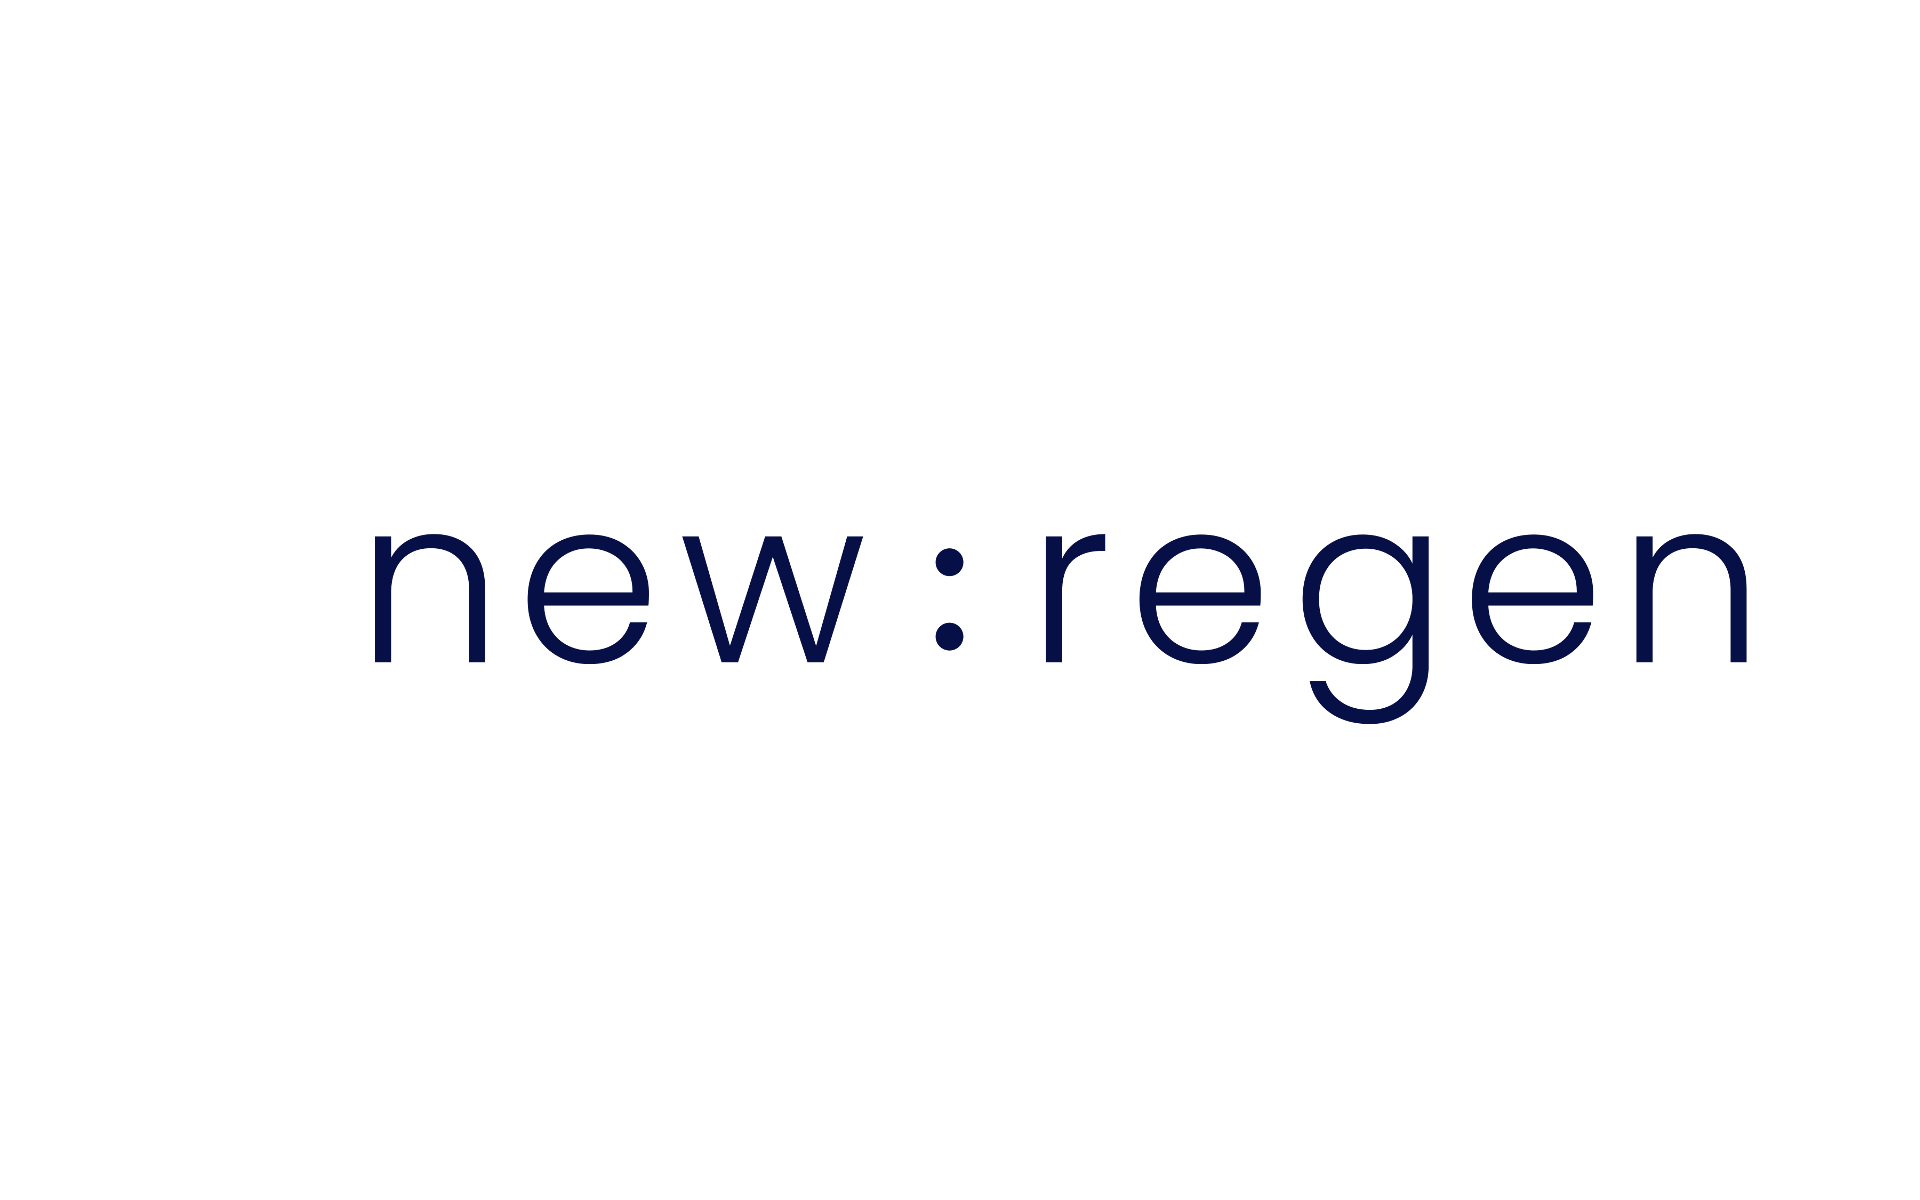 Newregen logo.blue march 23 (1)